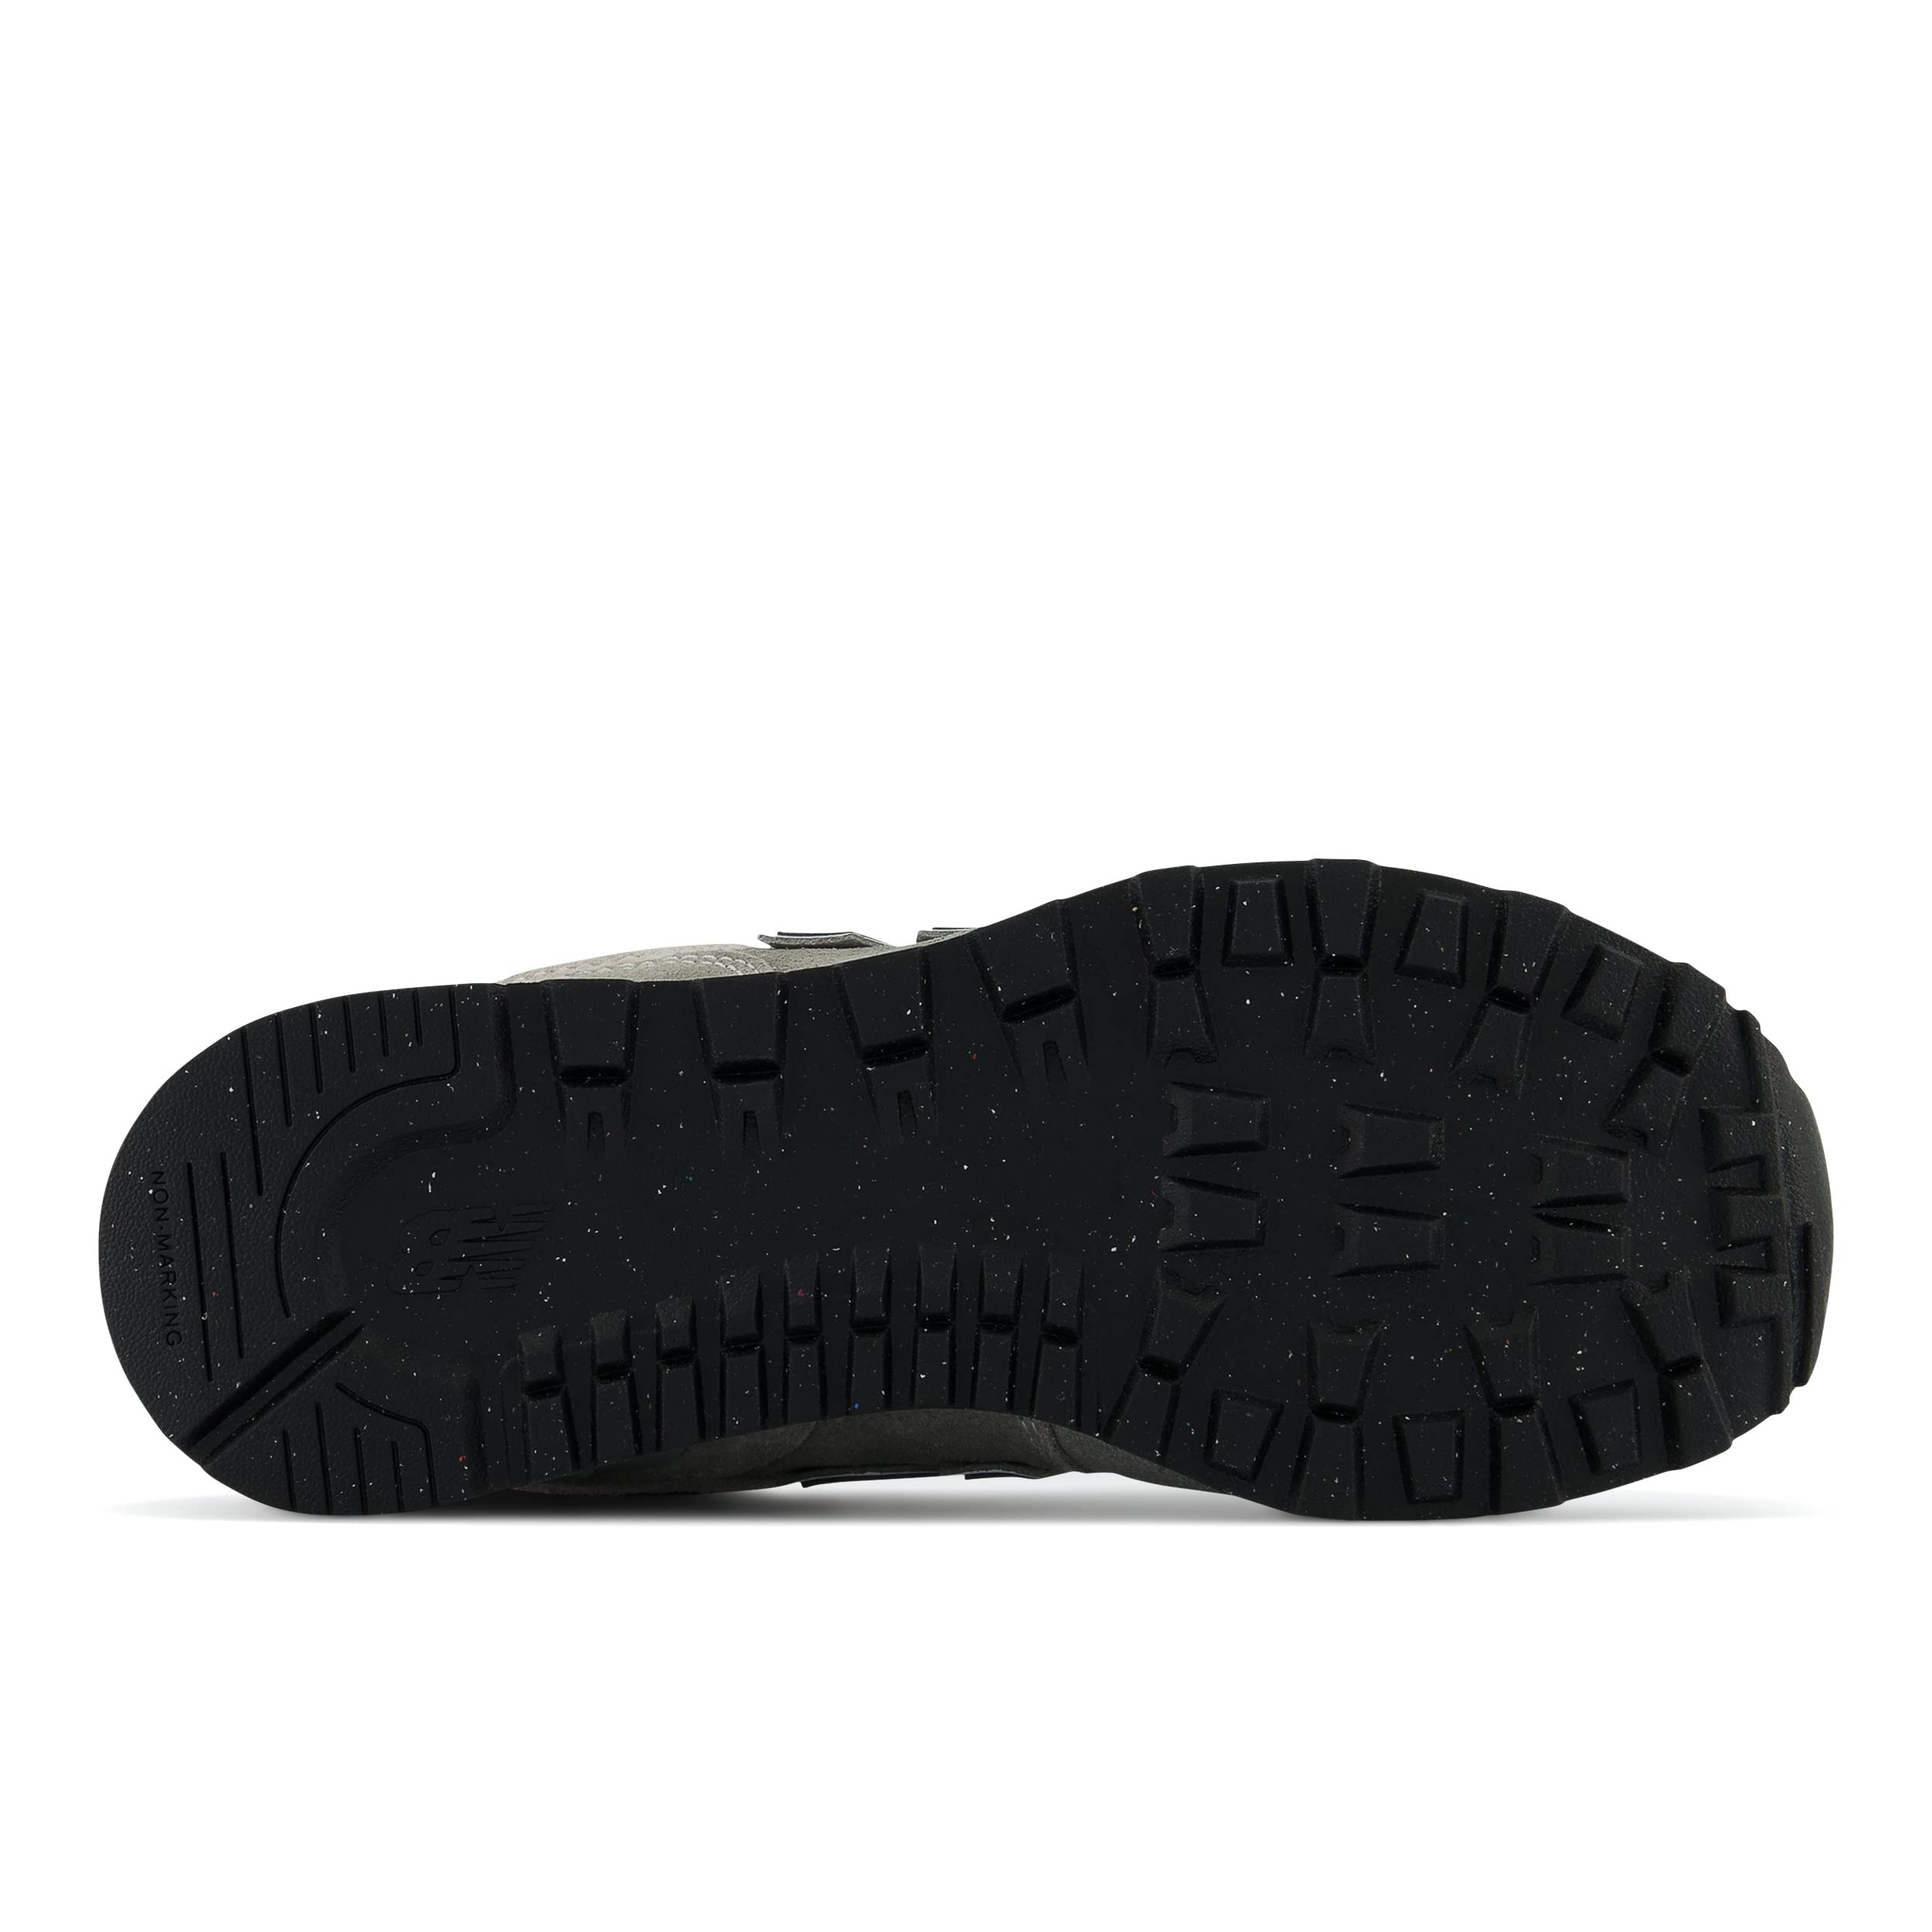 New Balance Unisex-Child 574 Core Lace-up Sneaker